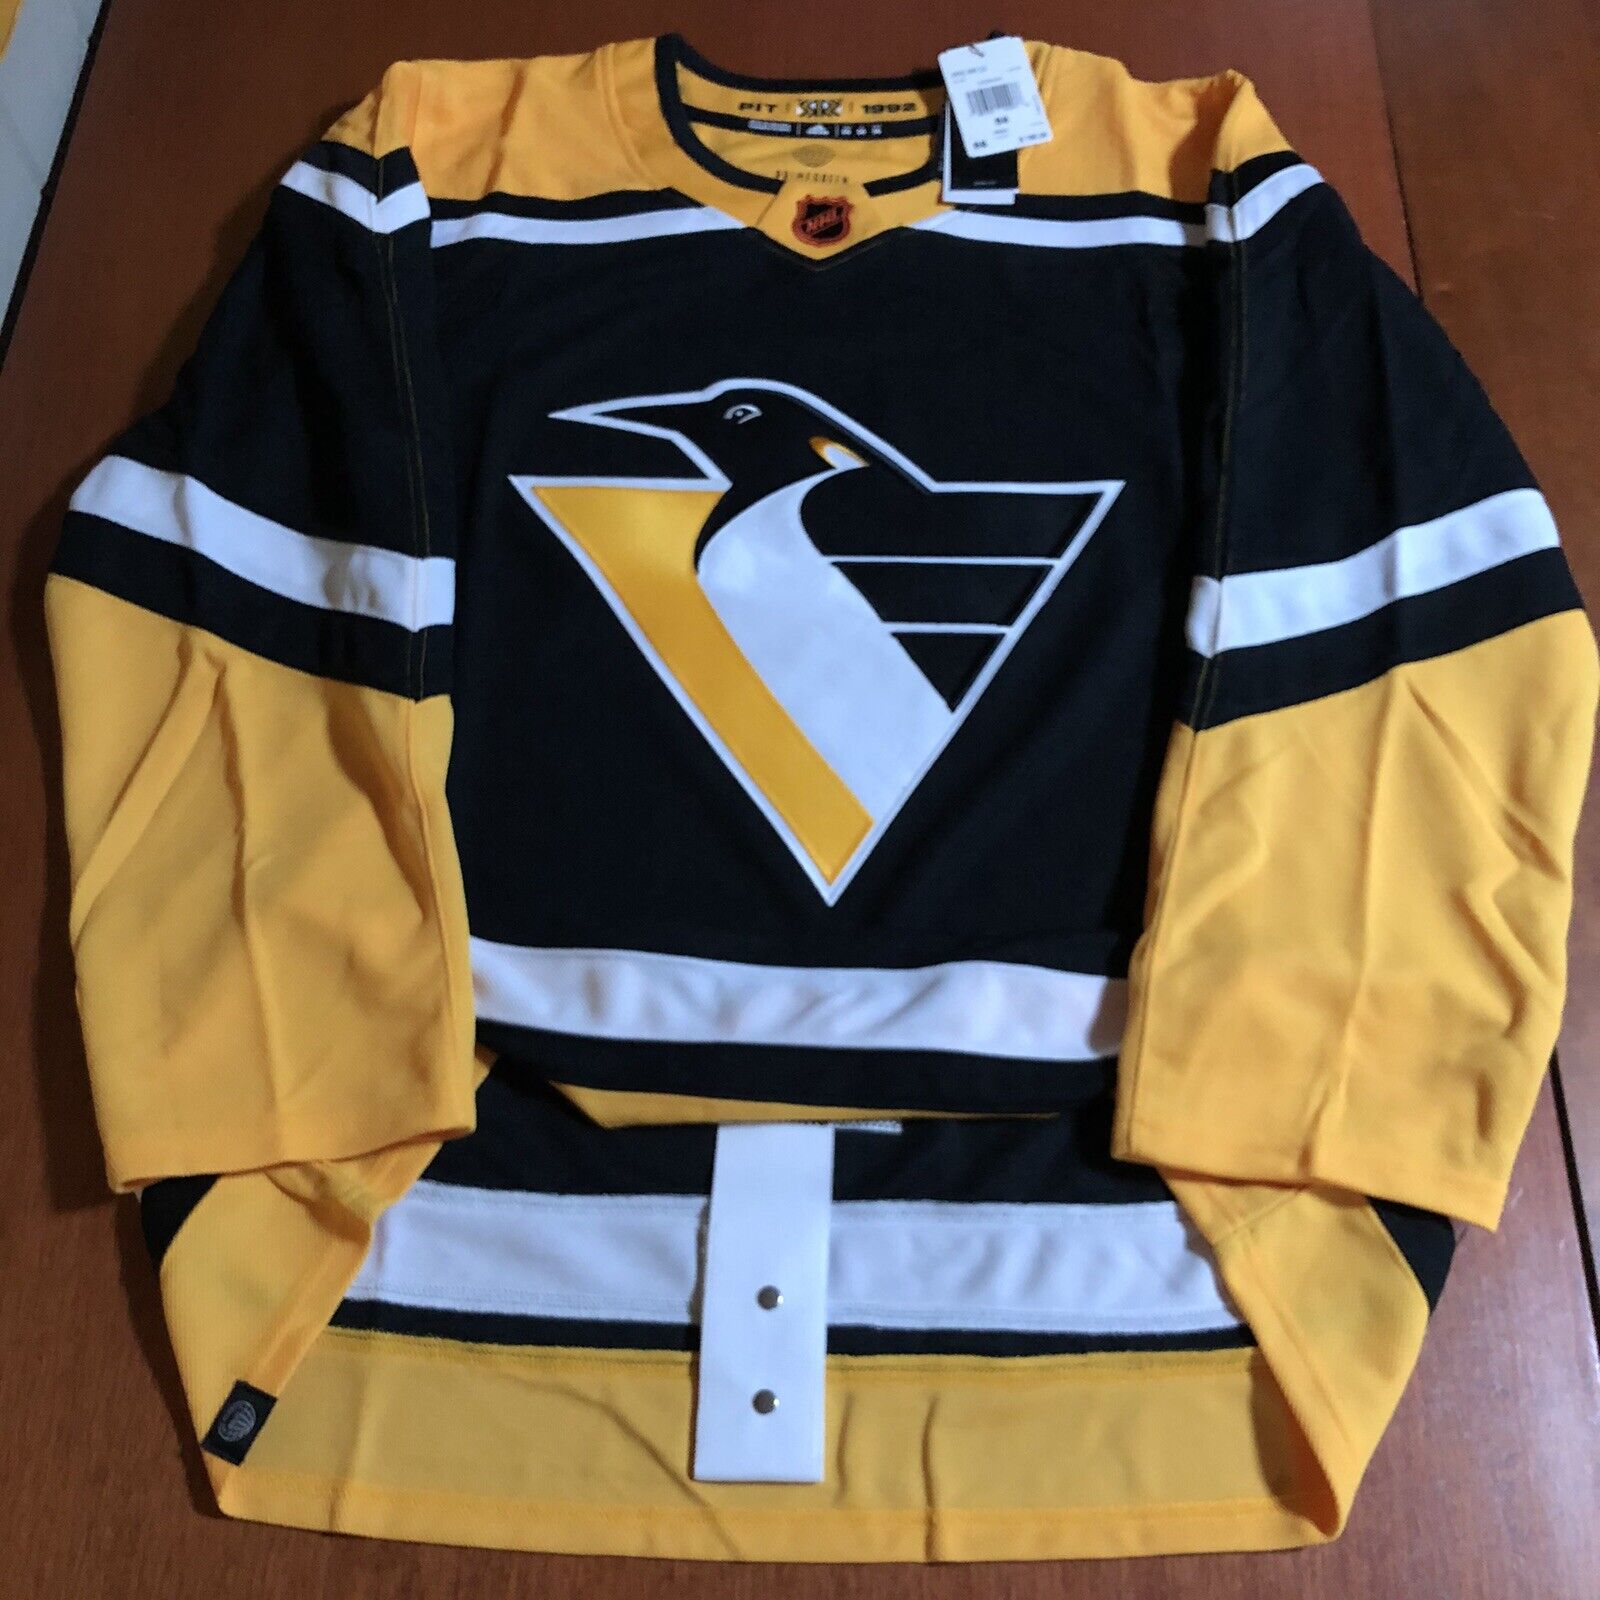 Robo-Penguin returns as Penguins' 'Reverse Retro' jersey